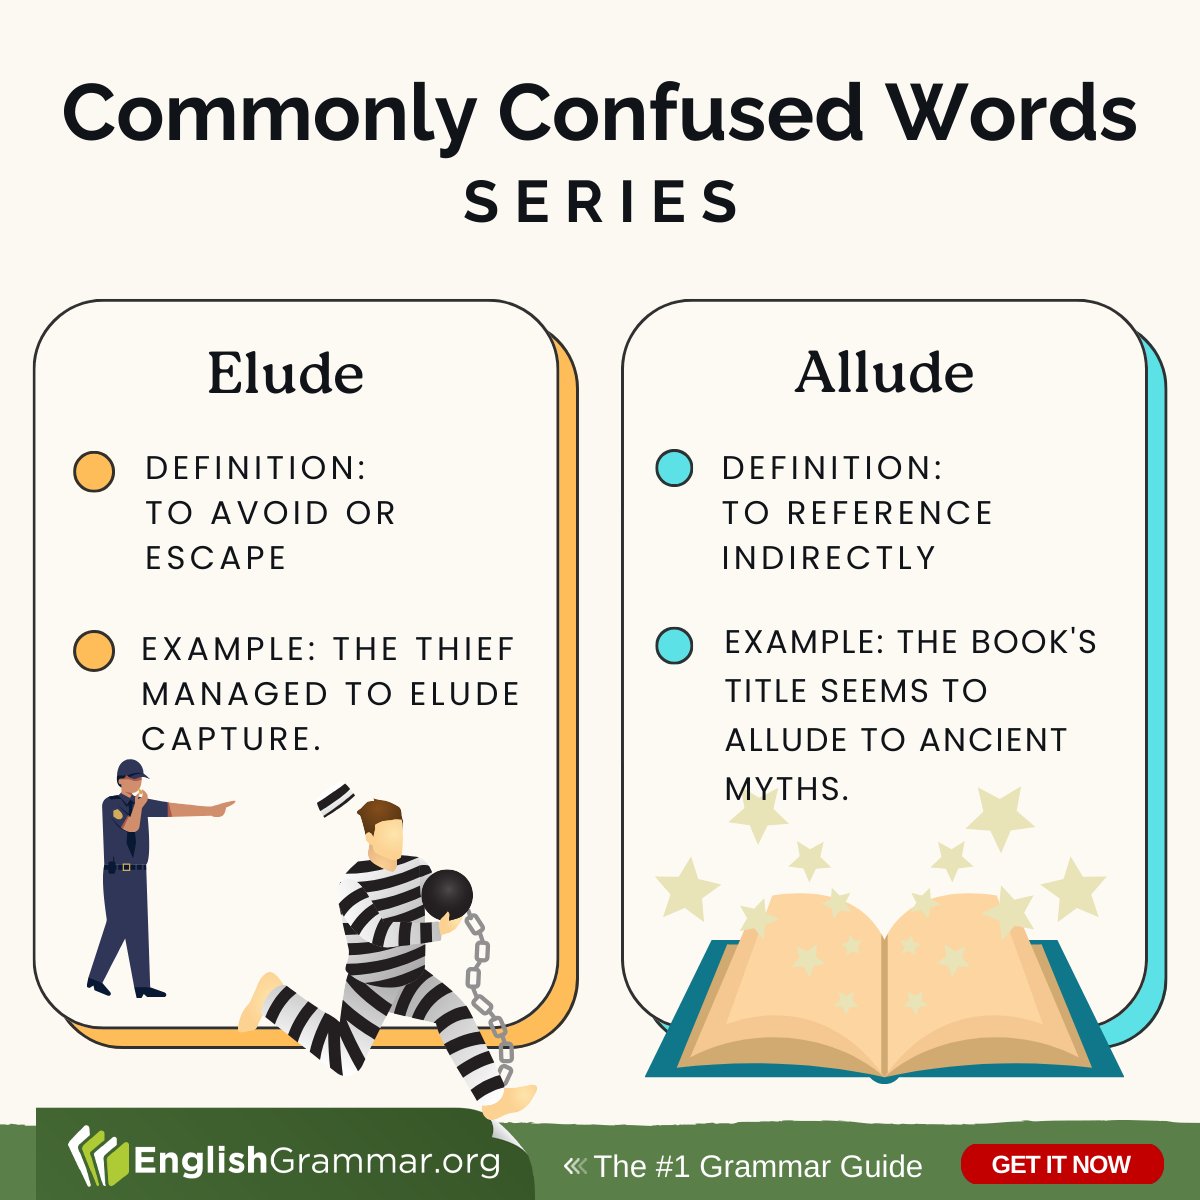 Elude vs. Allude #vocabulary #grammarupdates #writing